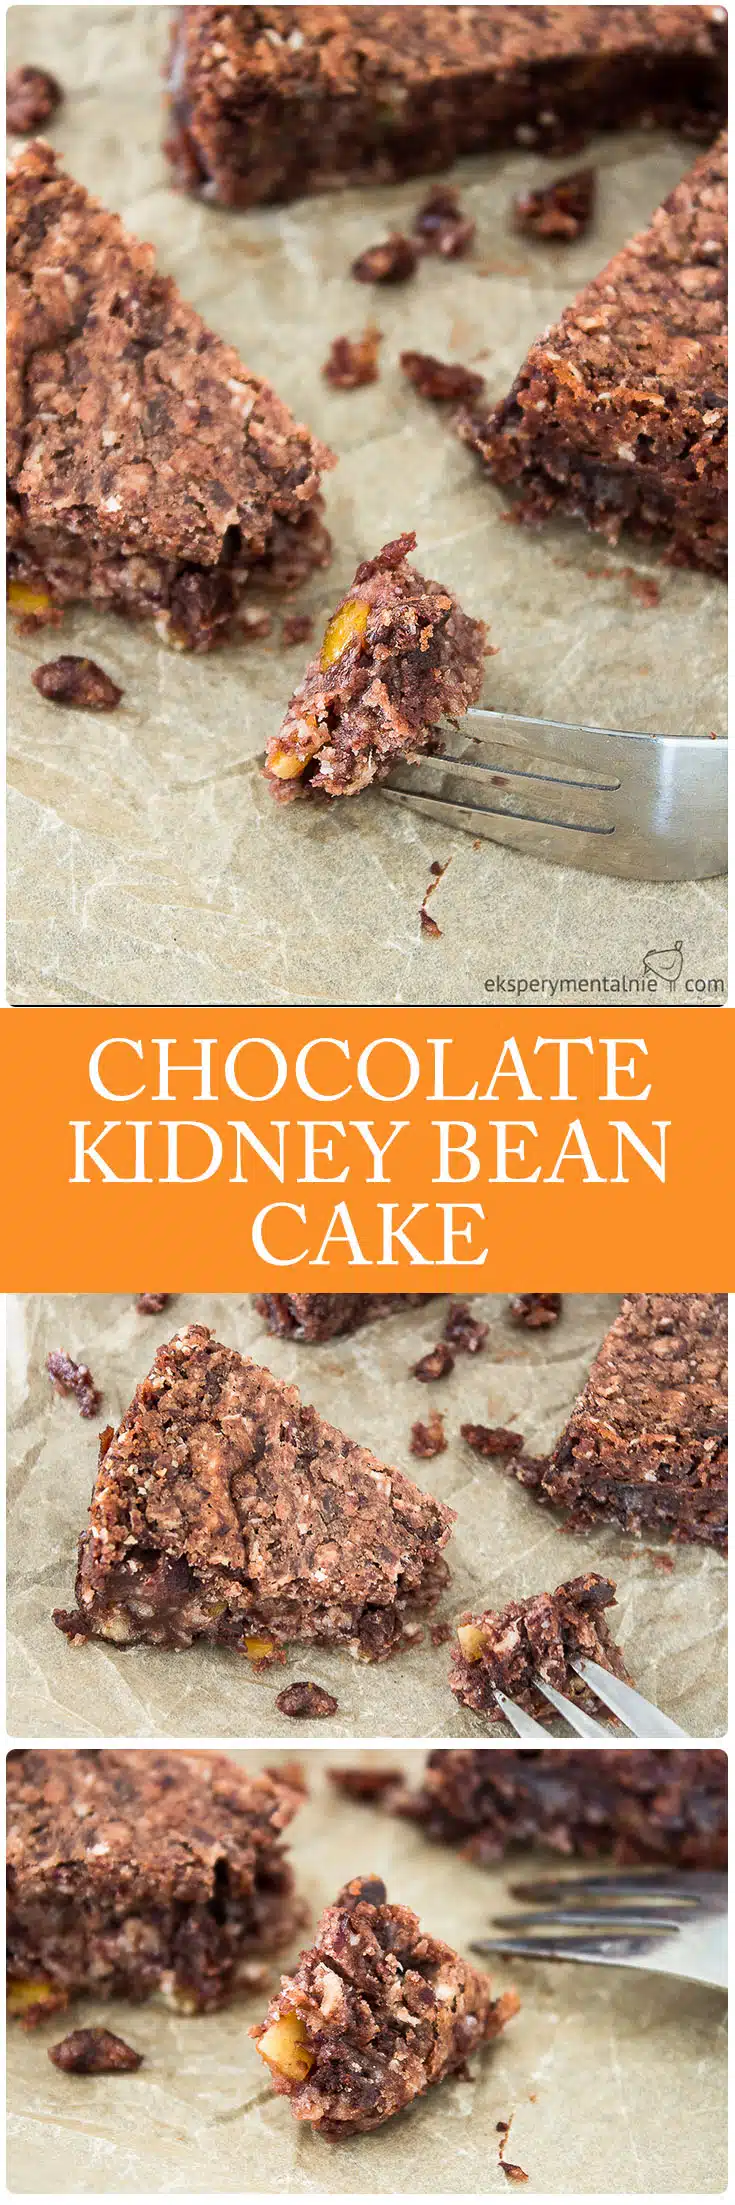 chocolate kidney bean cake vegan gluten free